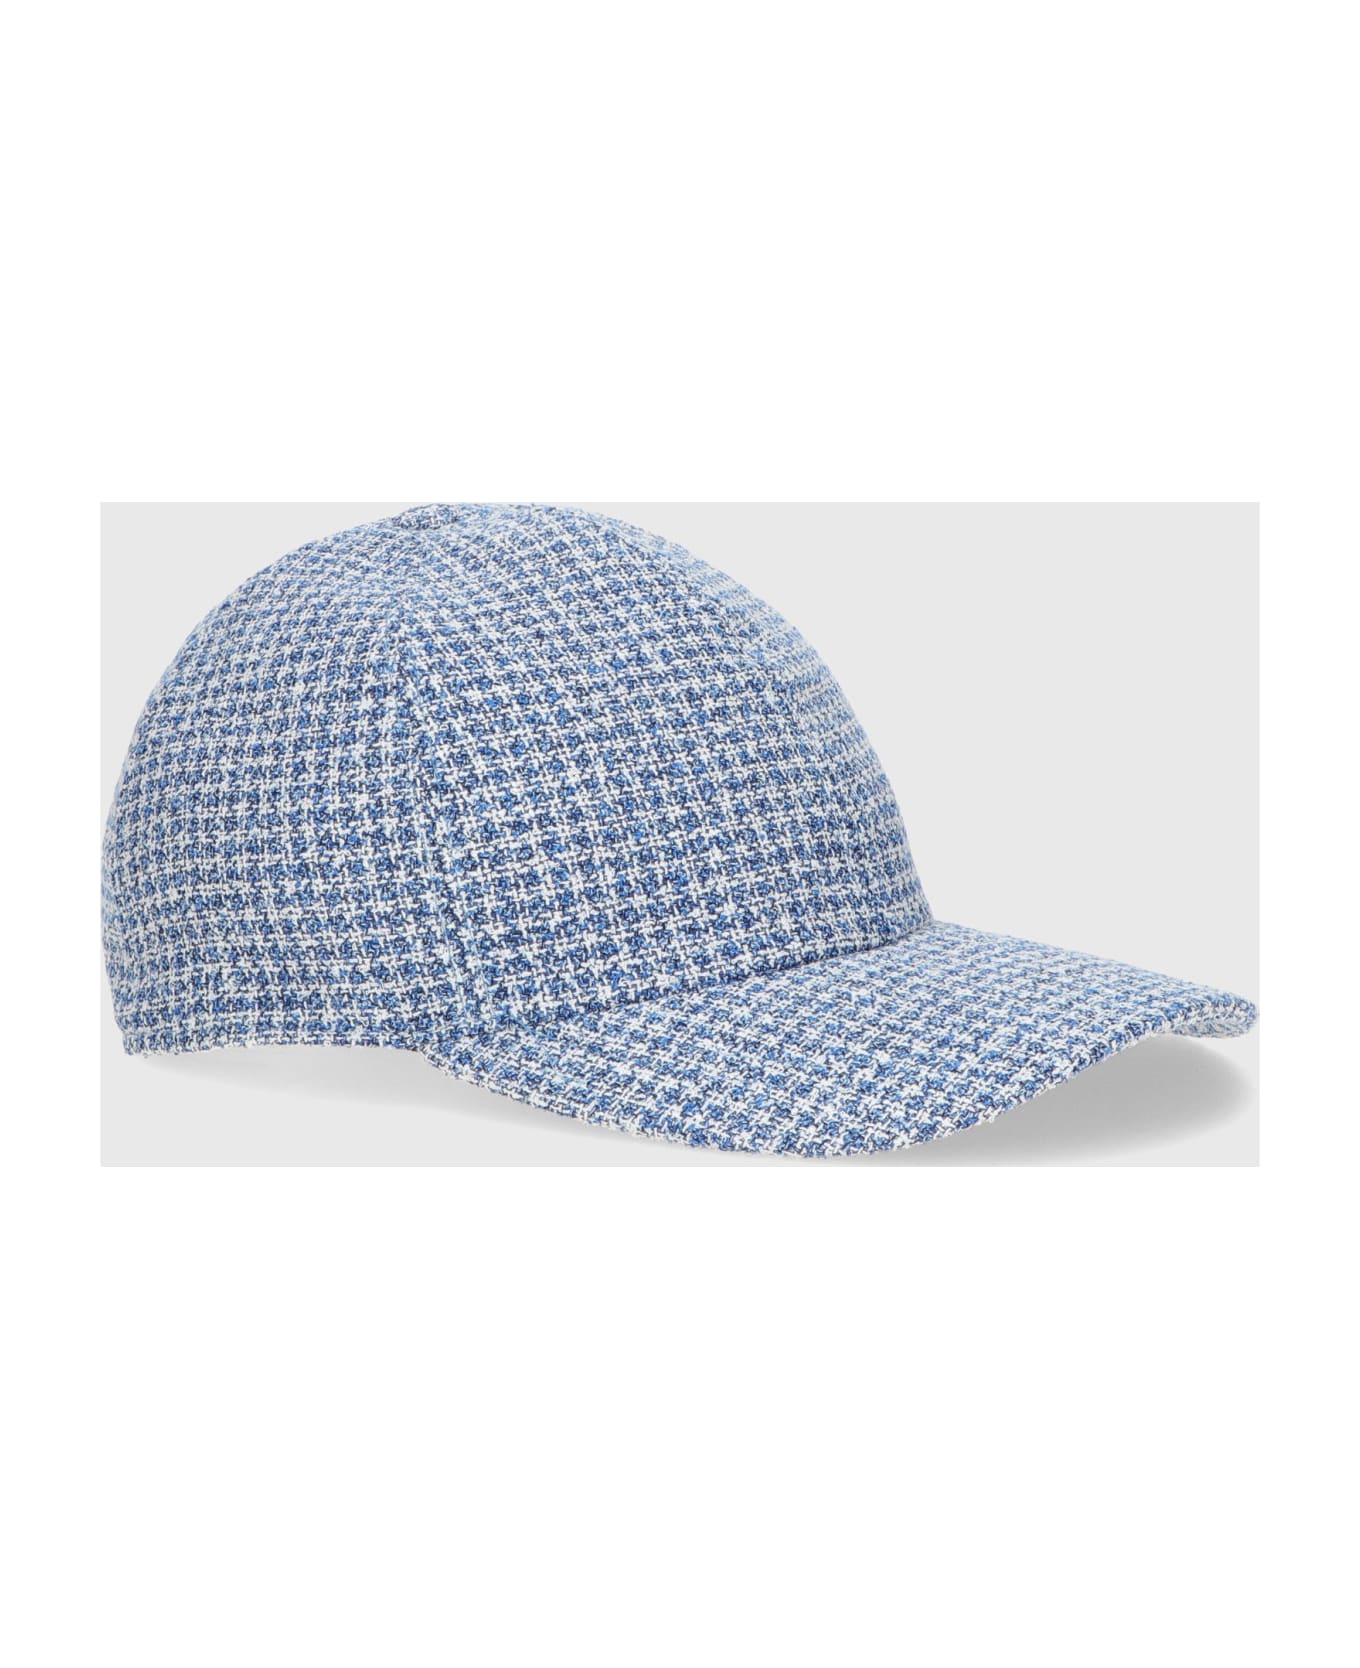 Borsalino Hiker Baseball Cap - HOUNDSTOOTH BLUE/WHITE 帽子